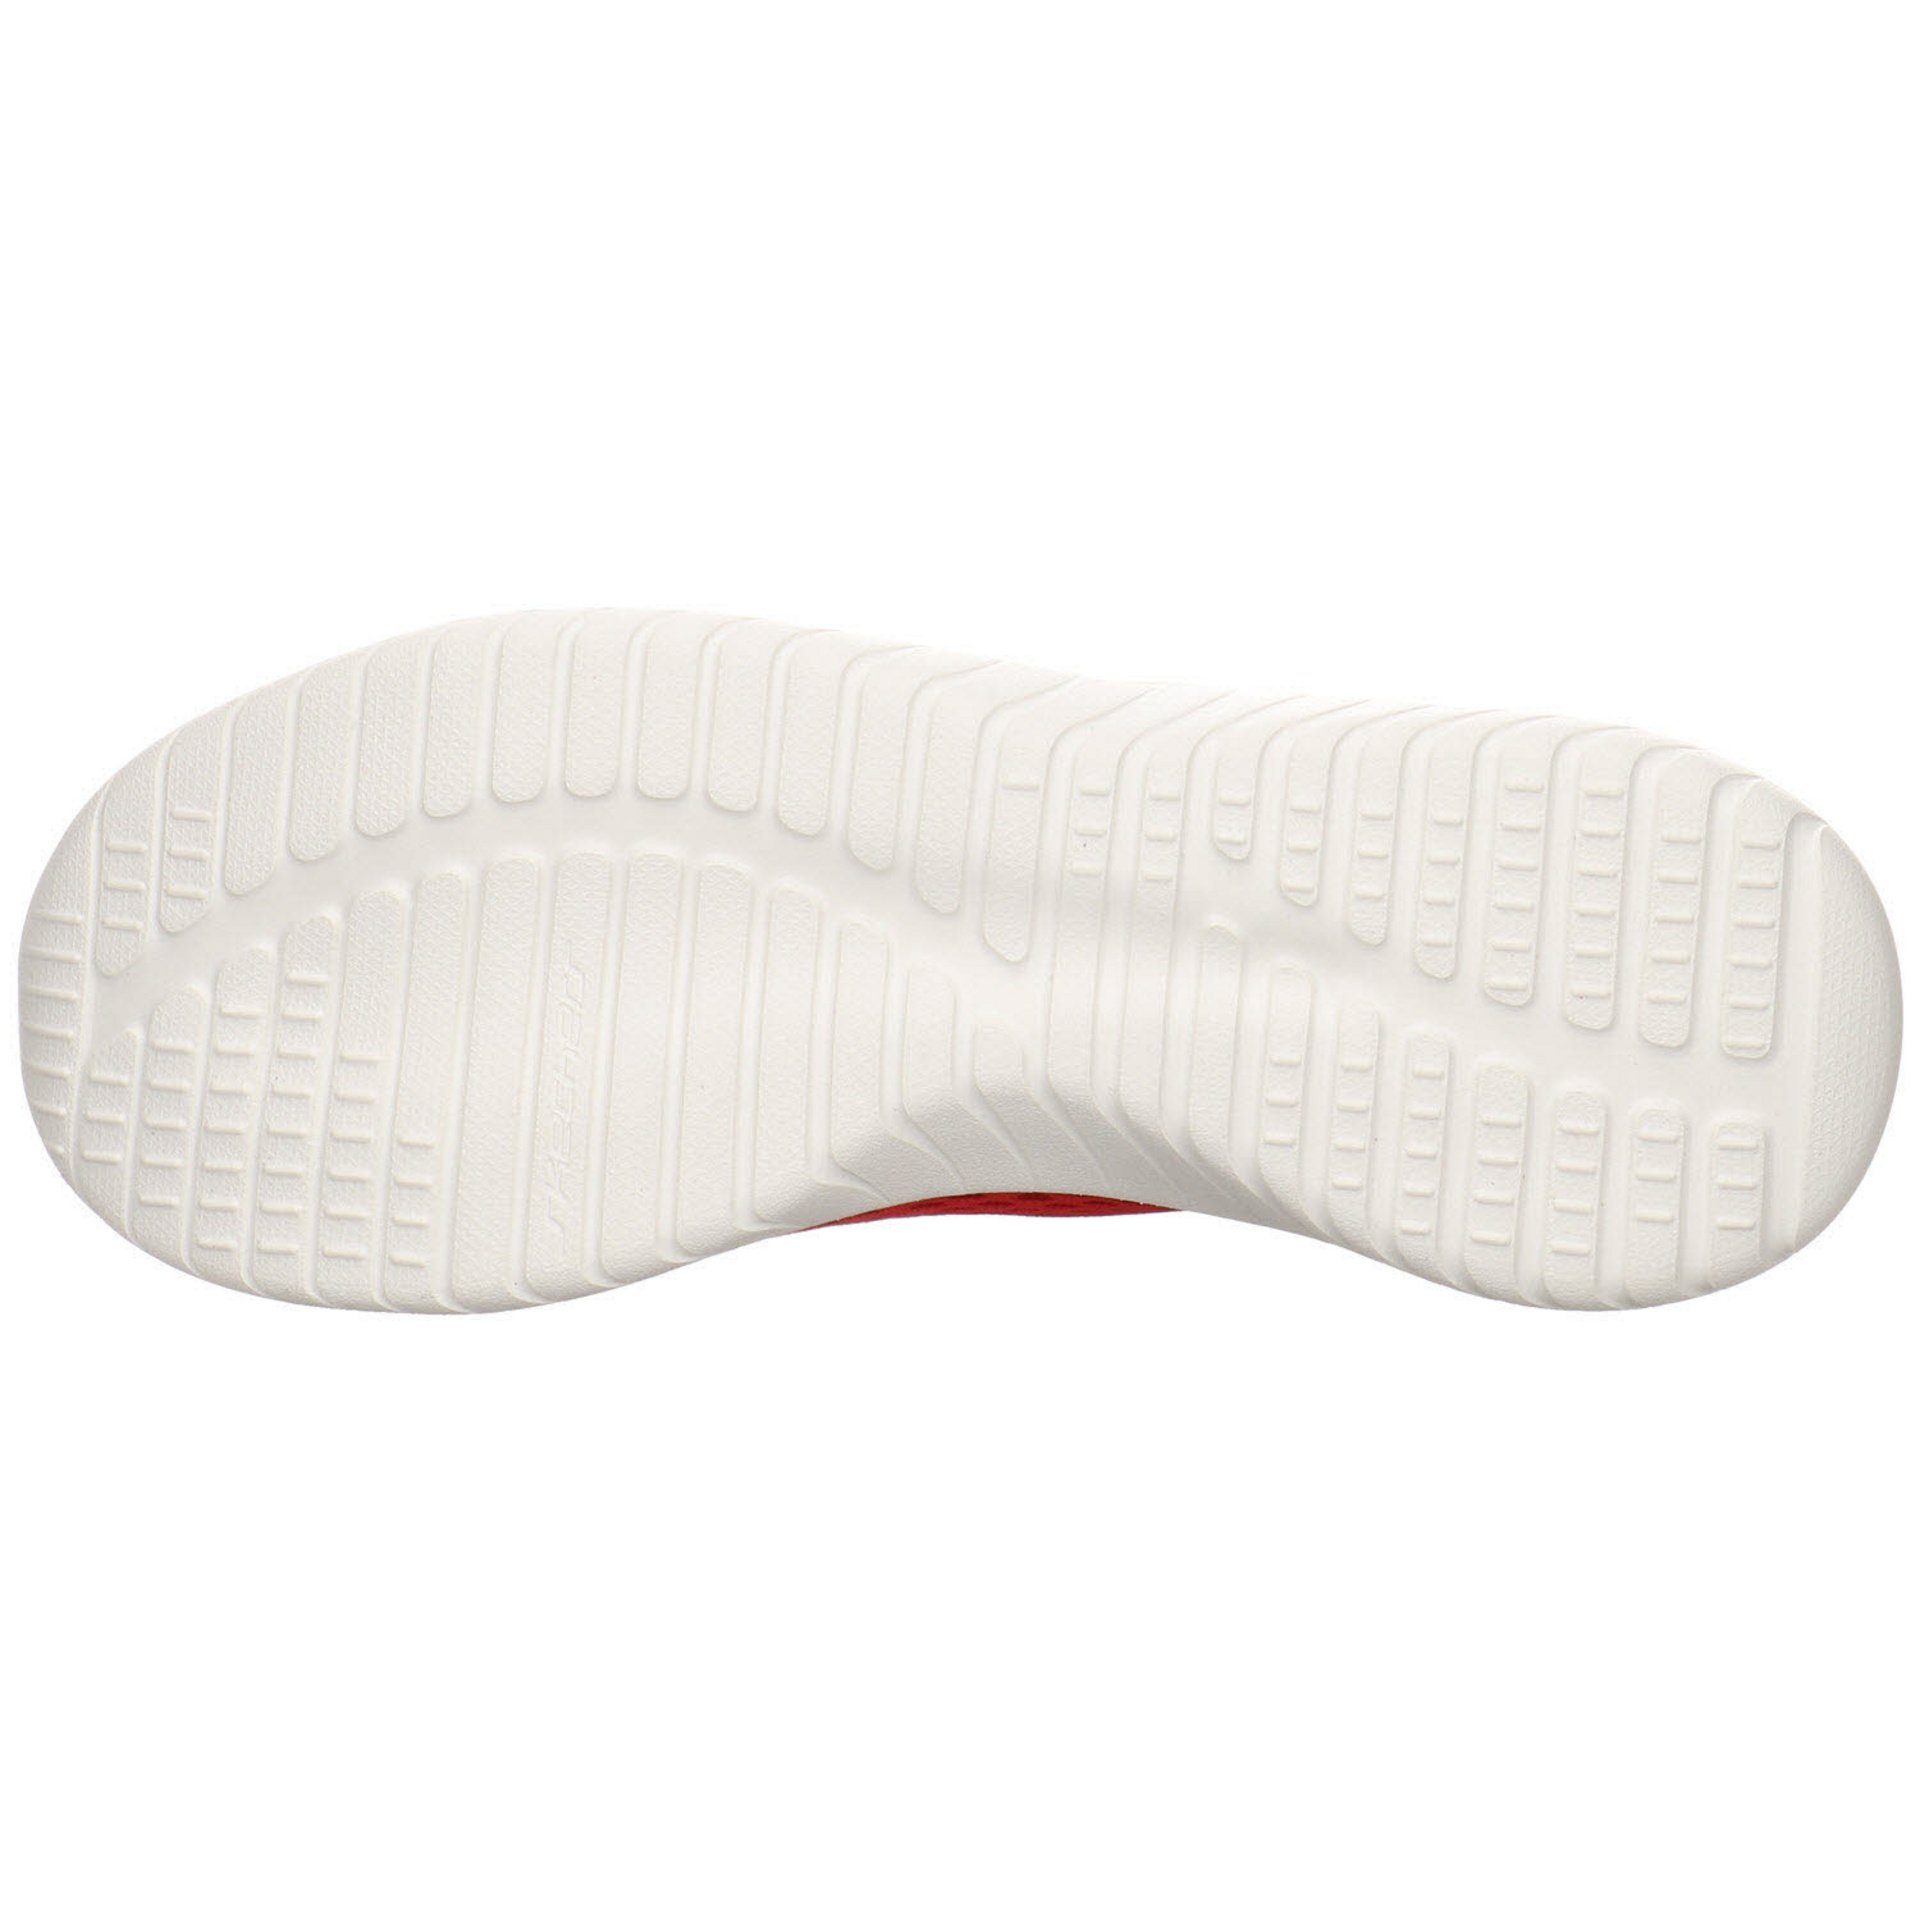 Schuhe Skechers Flex 2.0 Sneaker Ultra Textil Damen red/white Sneaker Sneaker